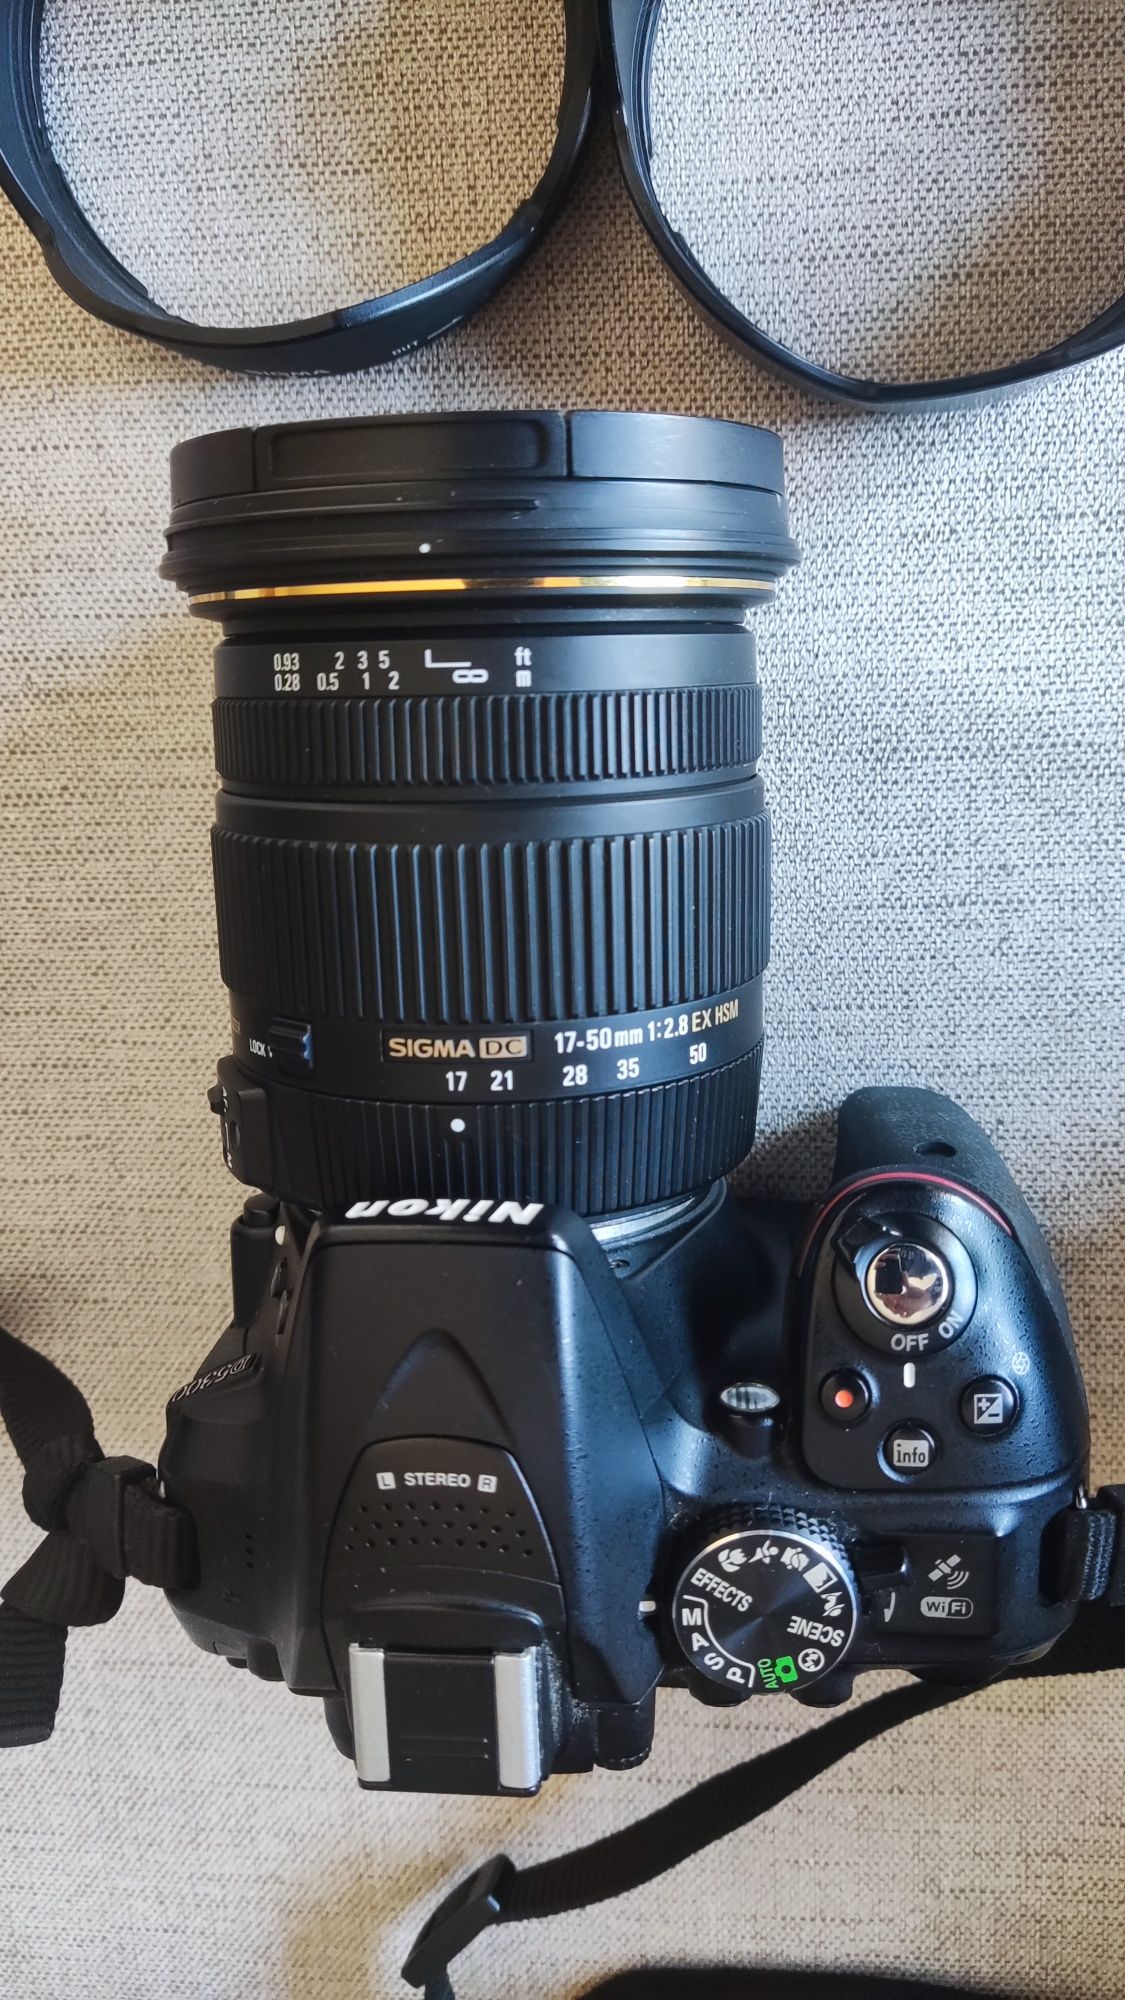 Máquina fotográfica Nikon D5300 + 3 objetivas + extras